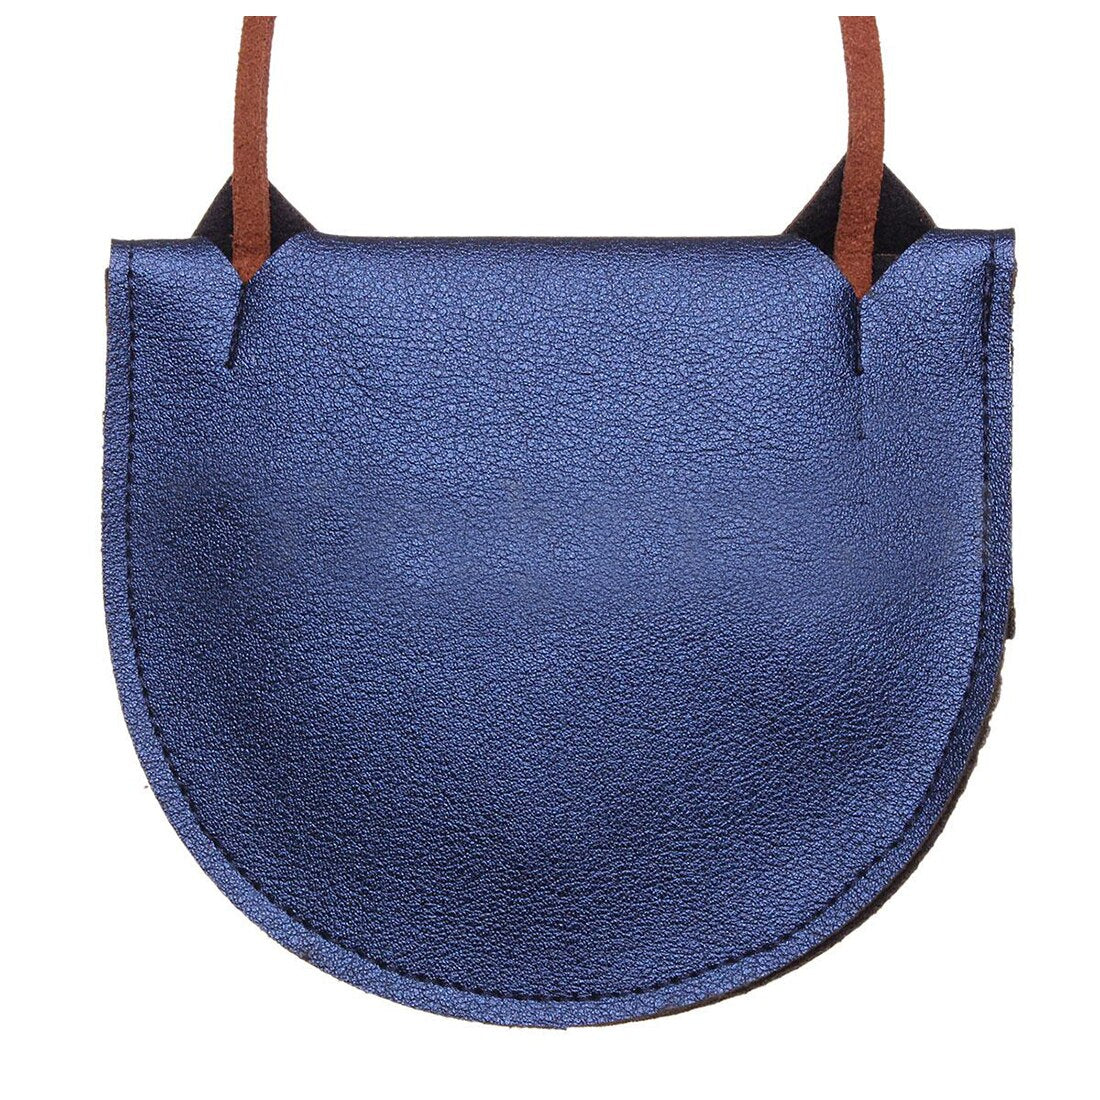 Women Leather Handbags Famous Brand Women Small Messenger Bags Female Crossbody Shoulder Bag Clutch Purse Bag - ebowsos